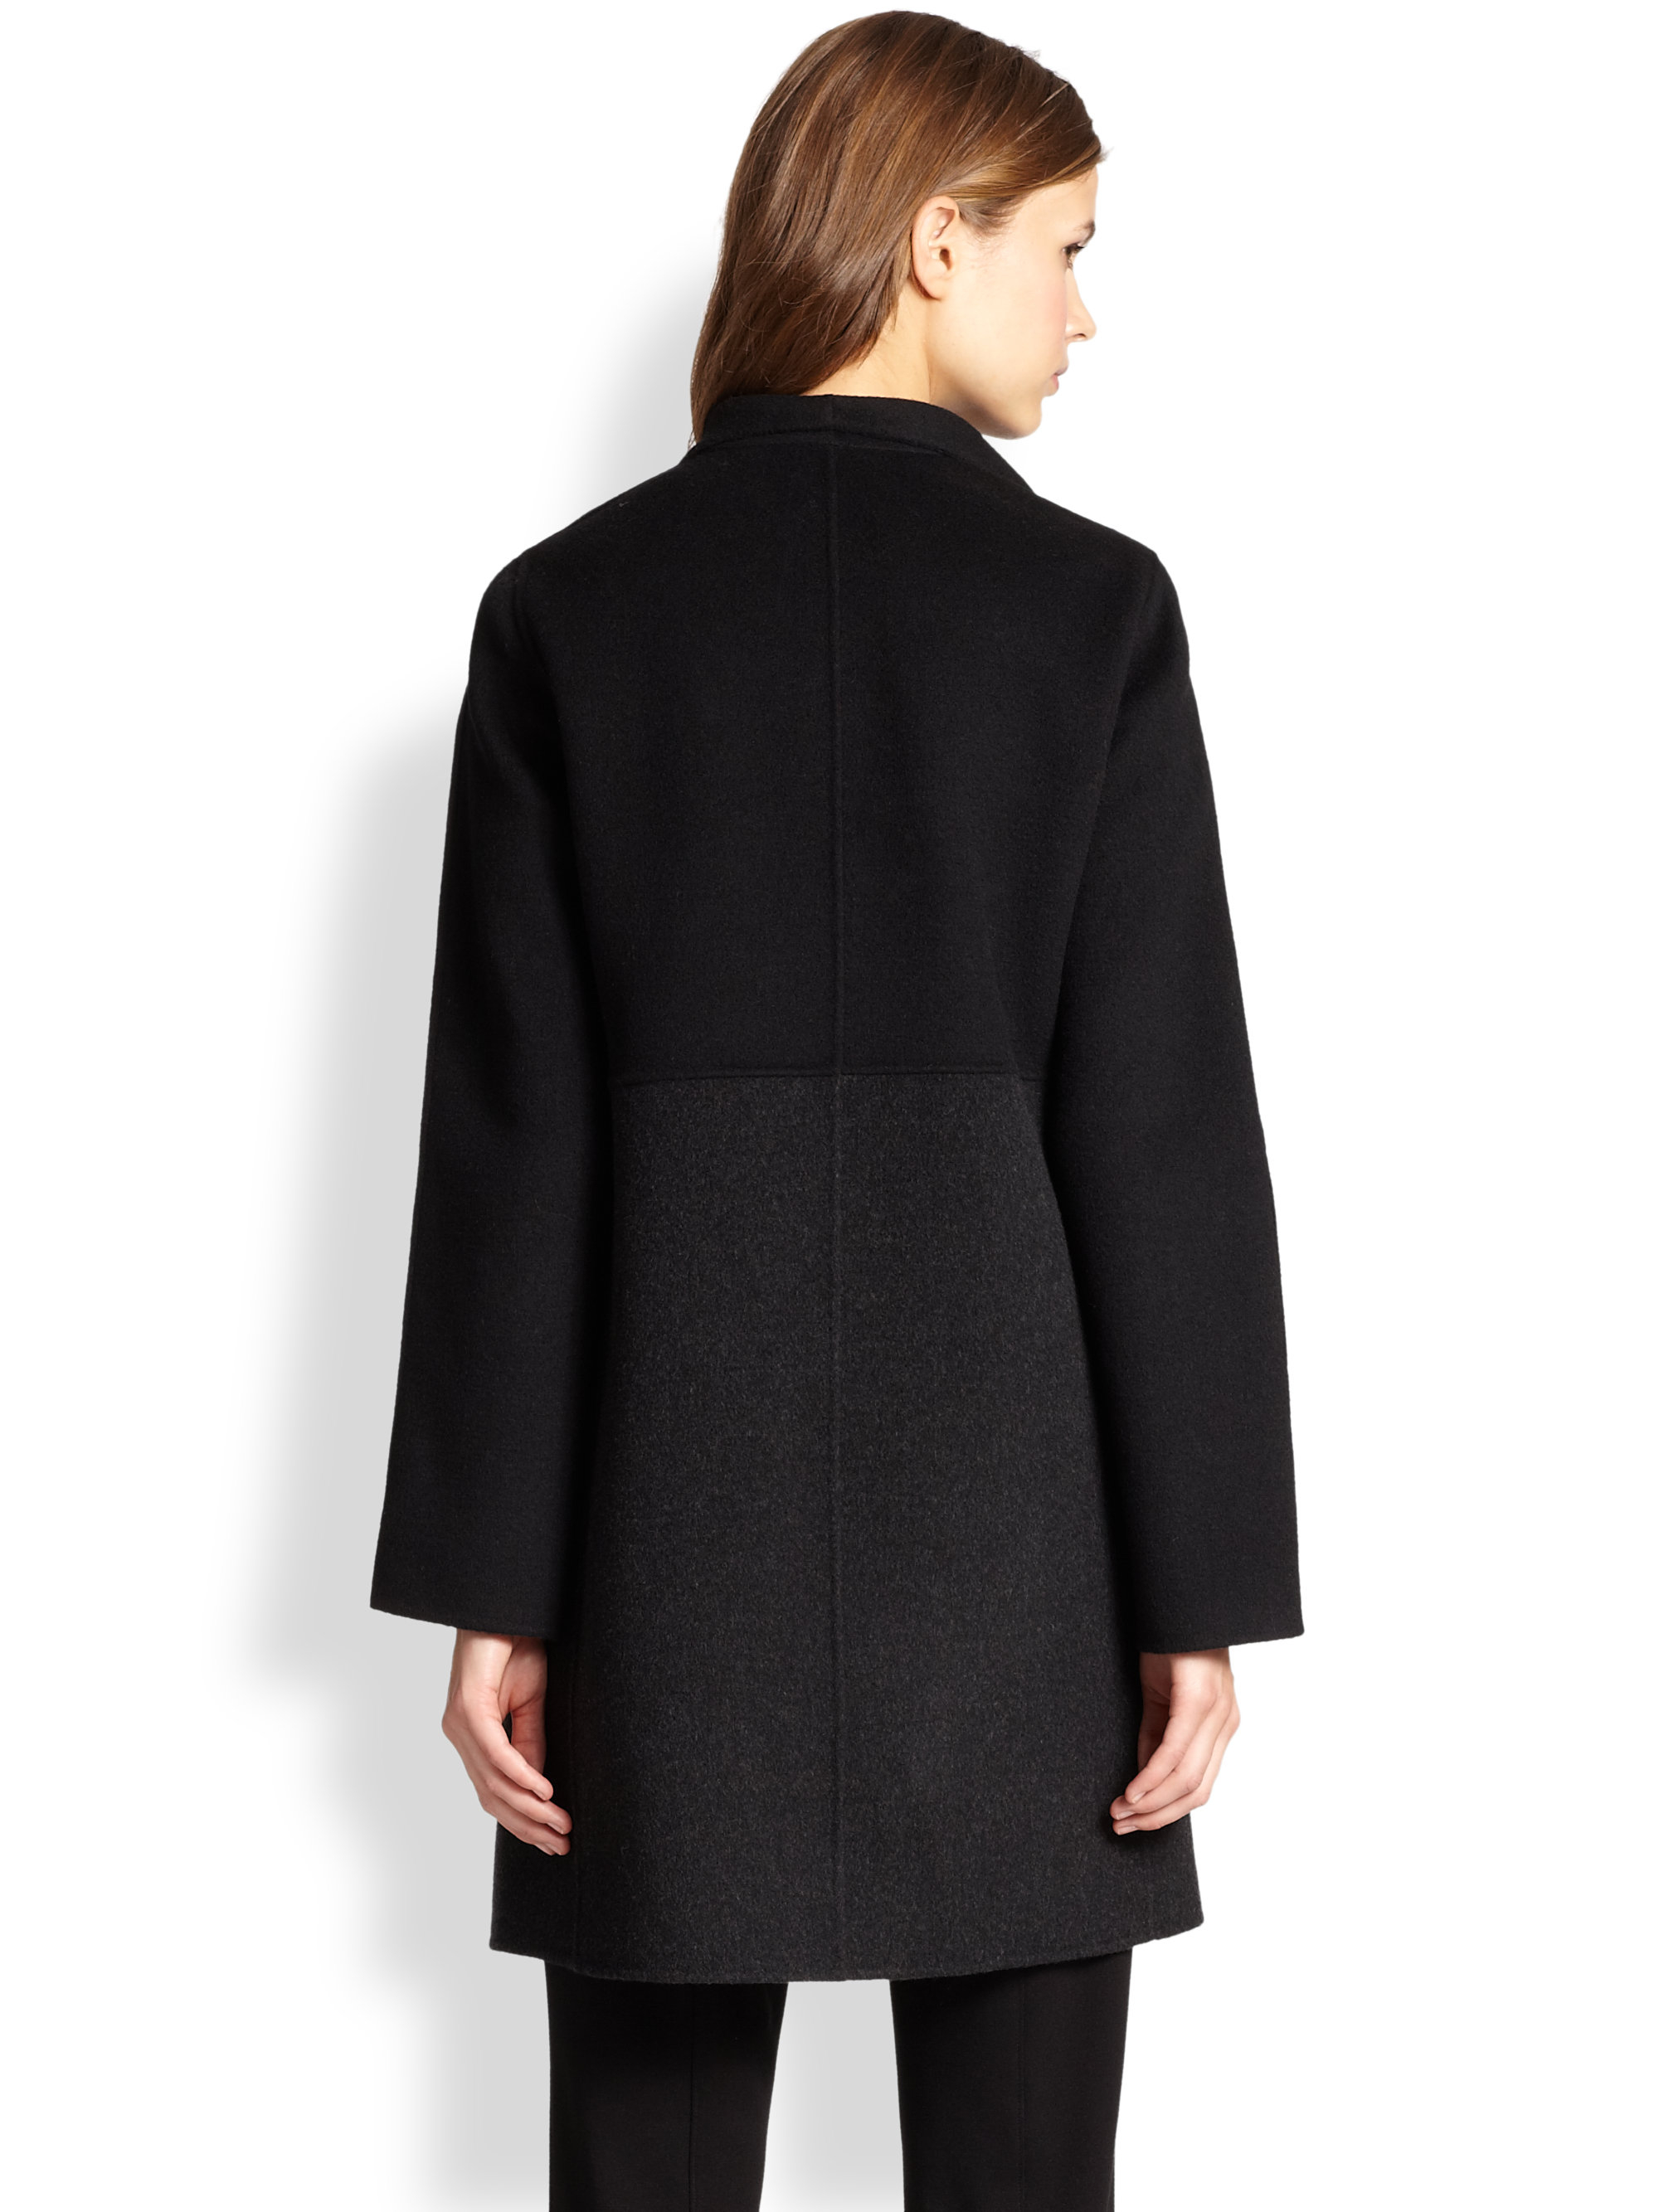 Lyst - Eileen Fisher Two-Tone Coat in Black